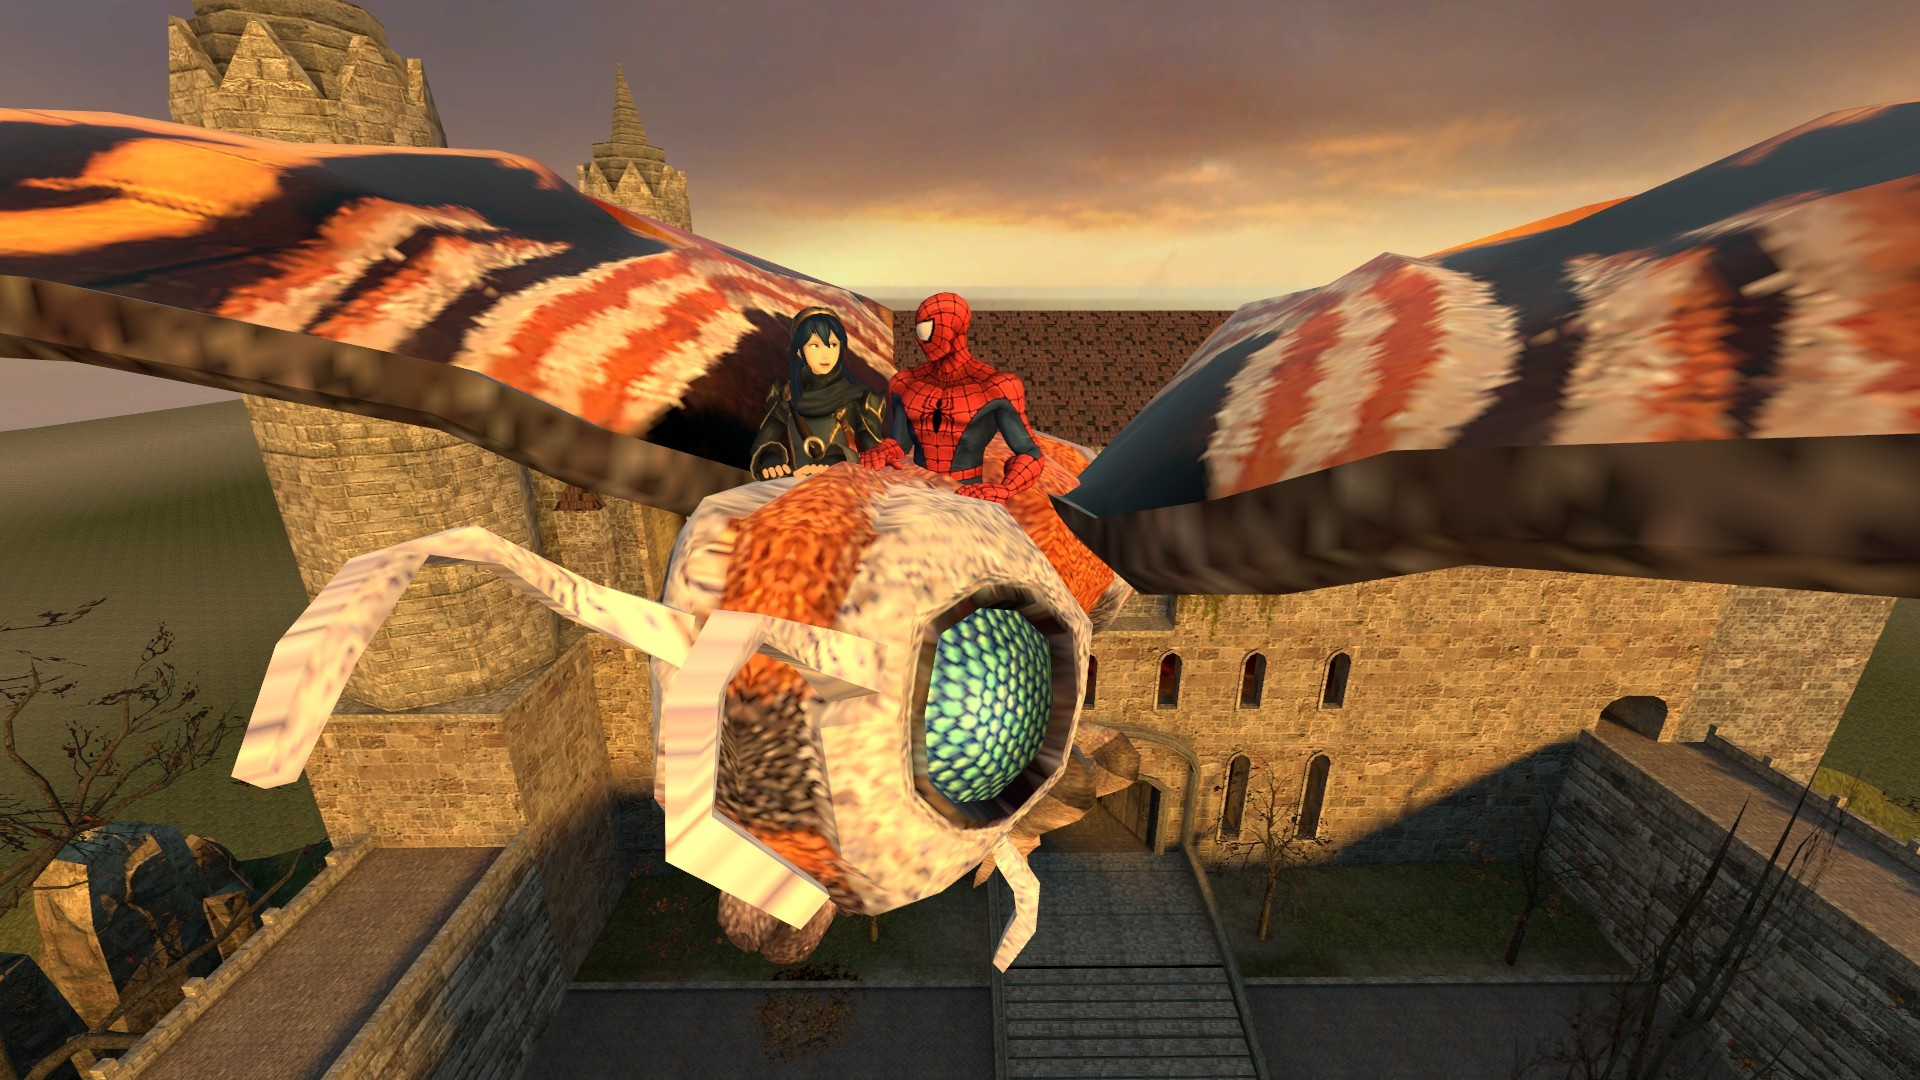 1920x1080 ... Lucina and Spider-man riding Mothra by kongzillarex619